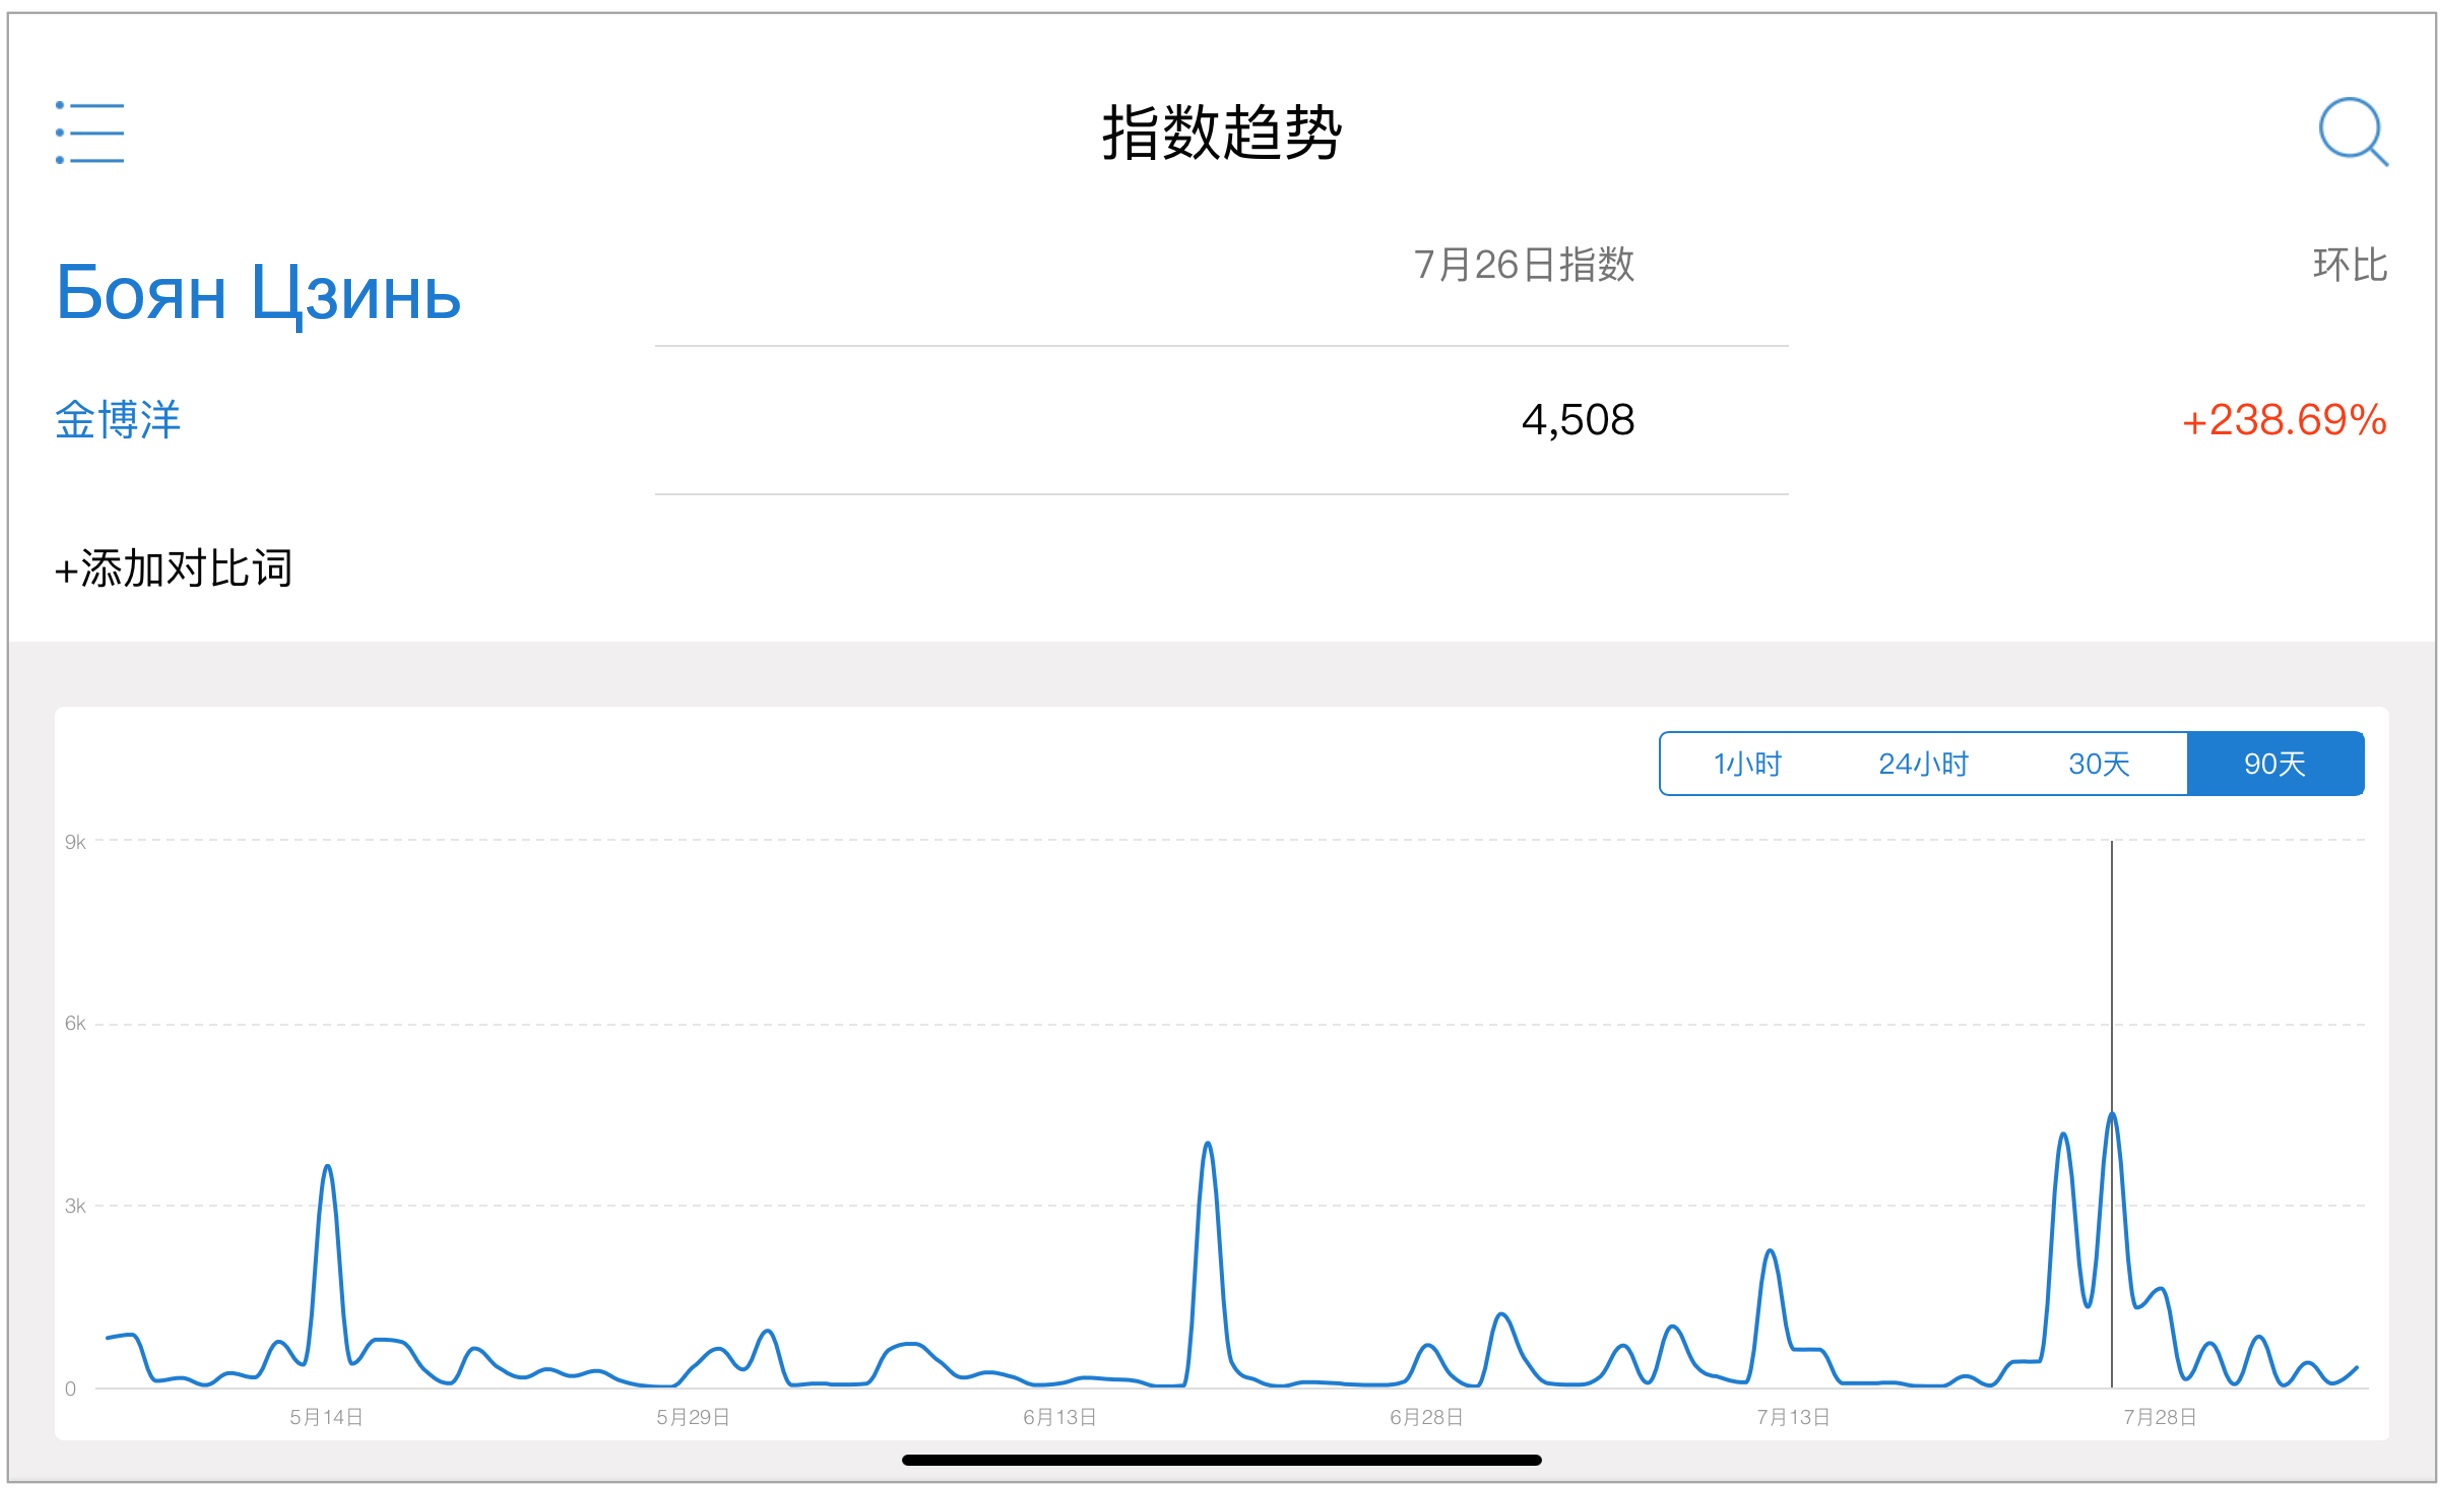 Король и Королева китайского интернета: статистика по Weibo